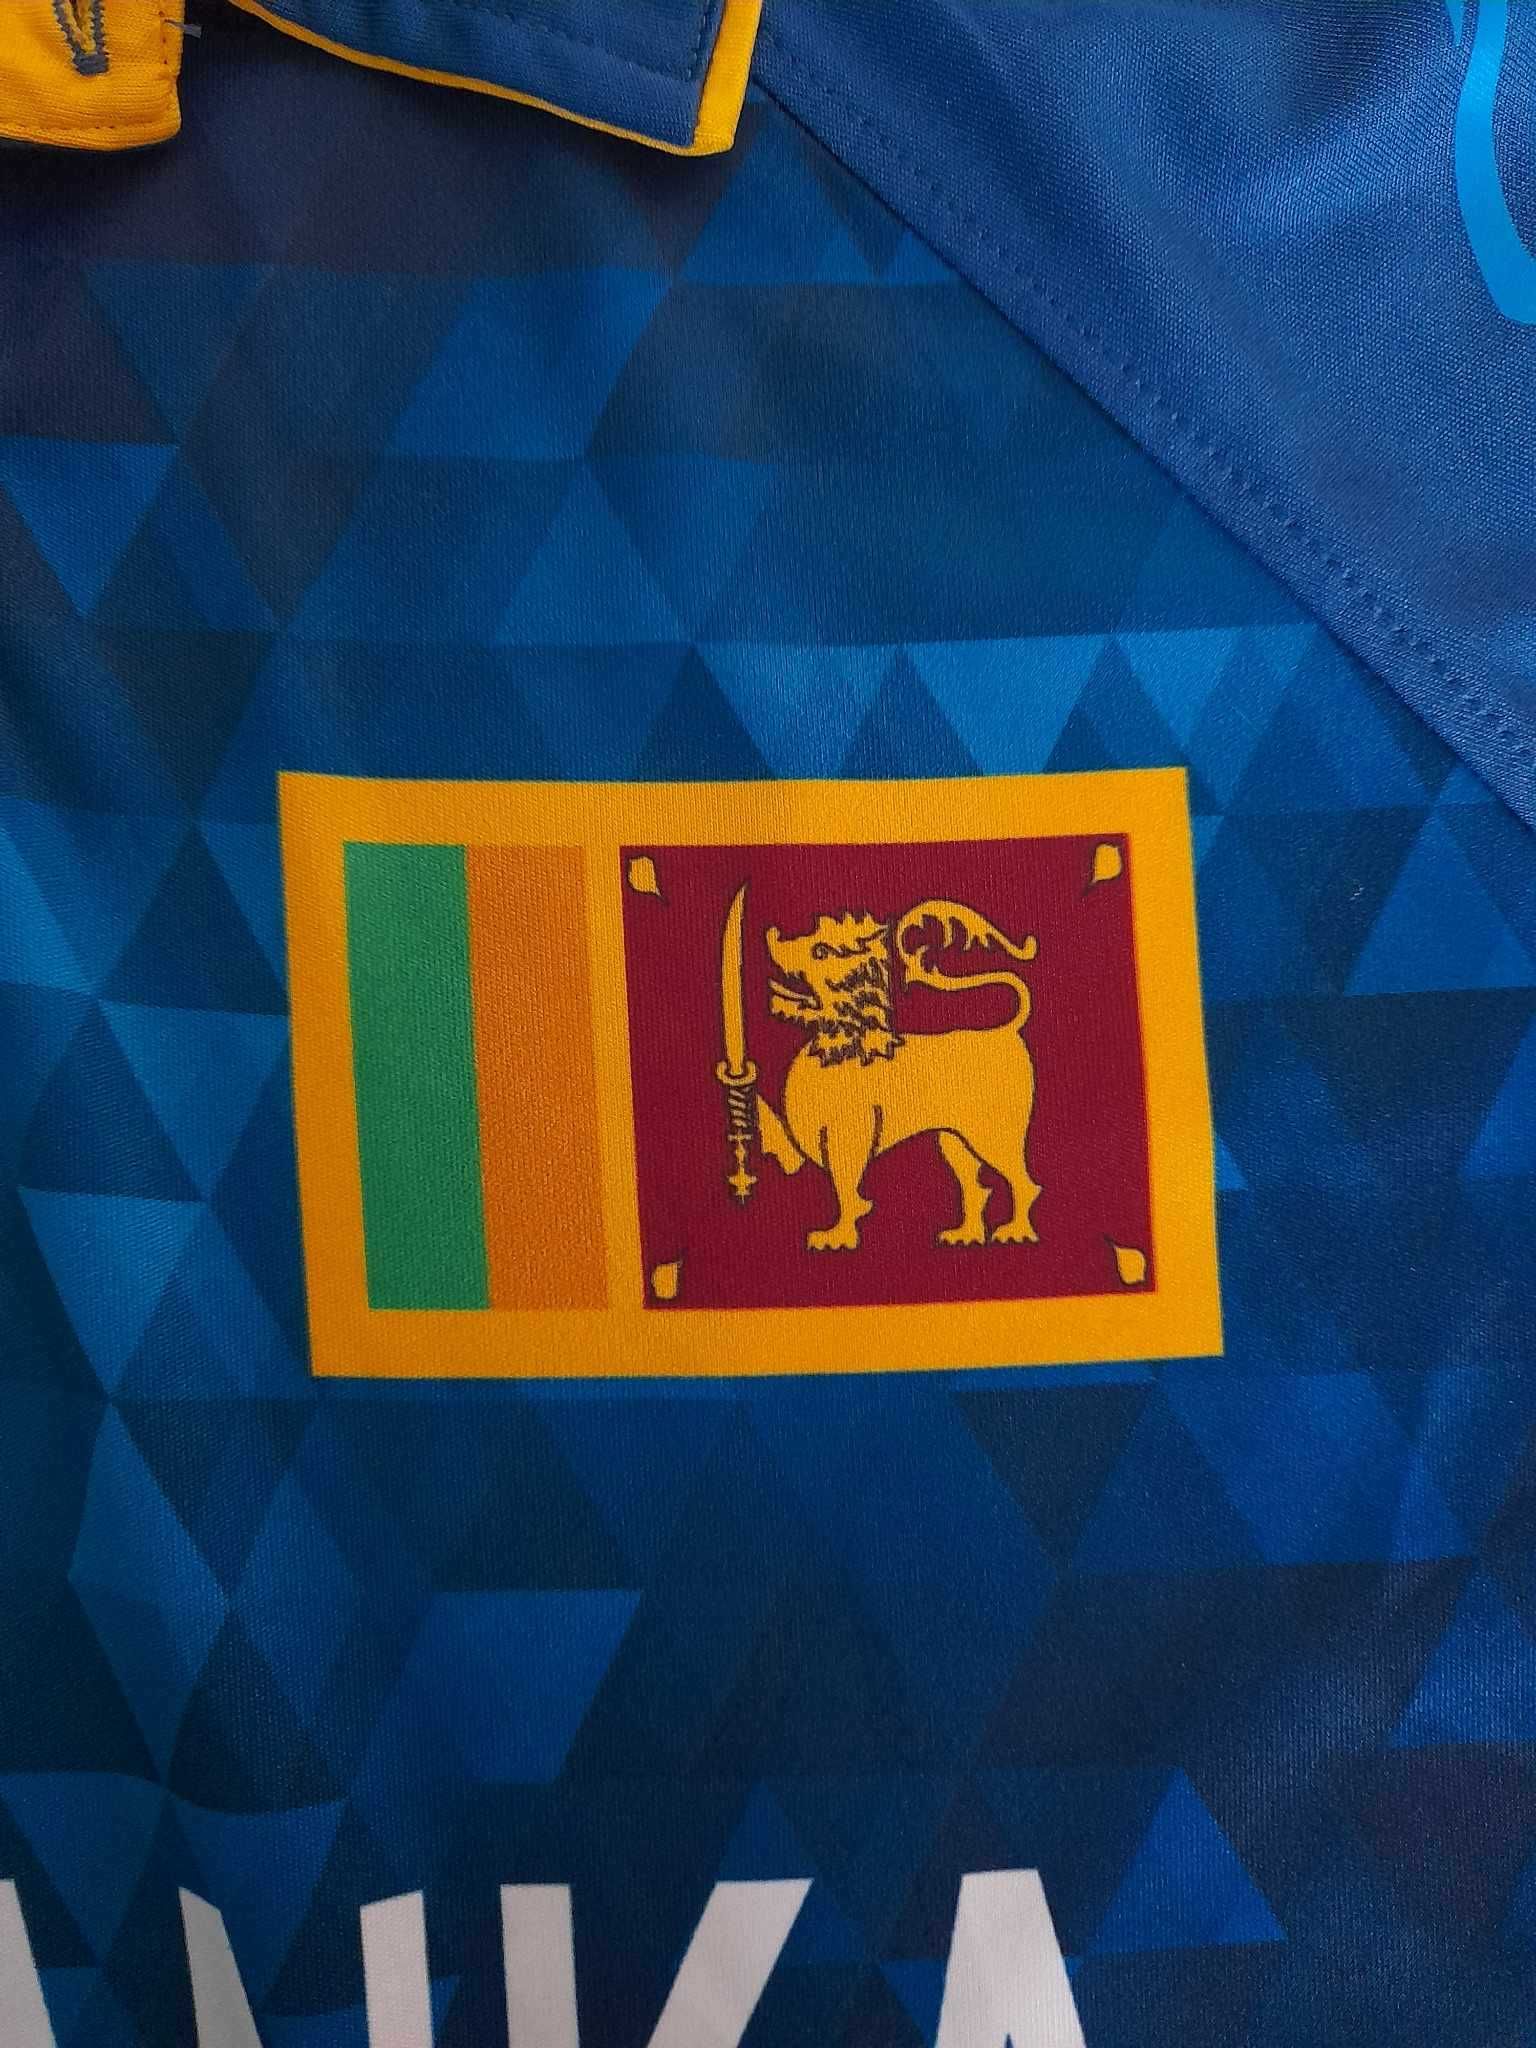 Koszulka piłkarska Sri Lanka